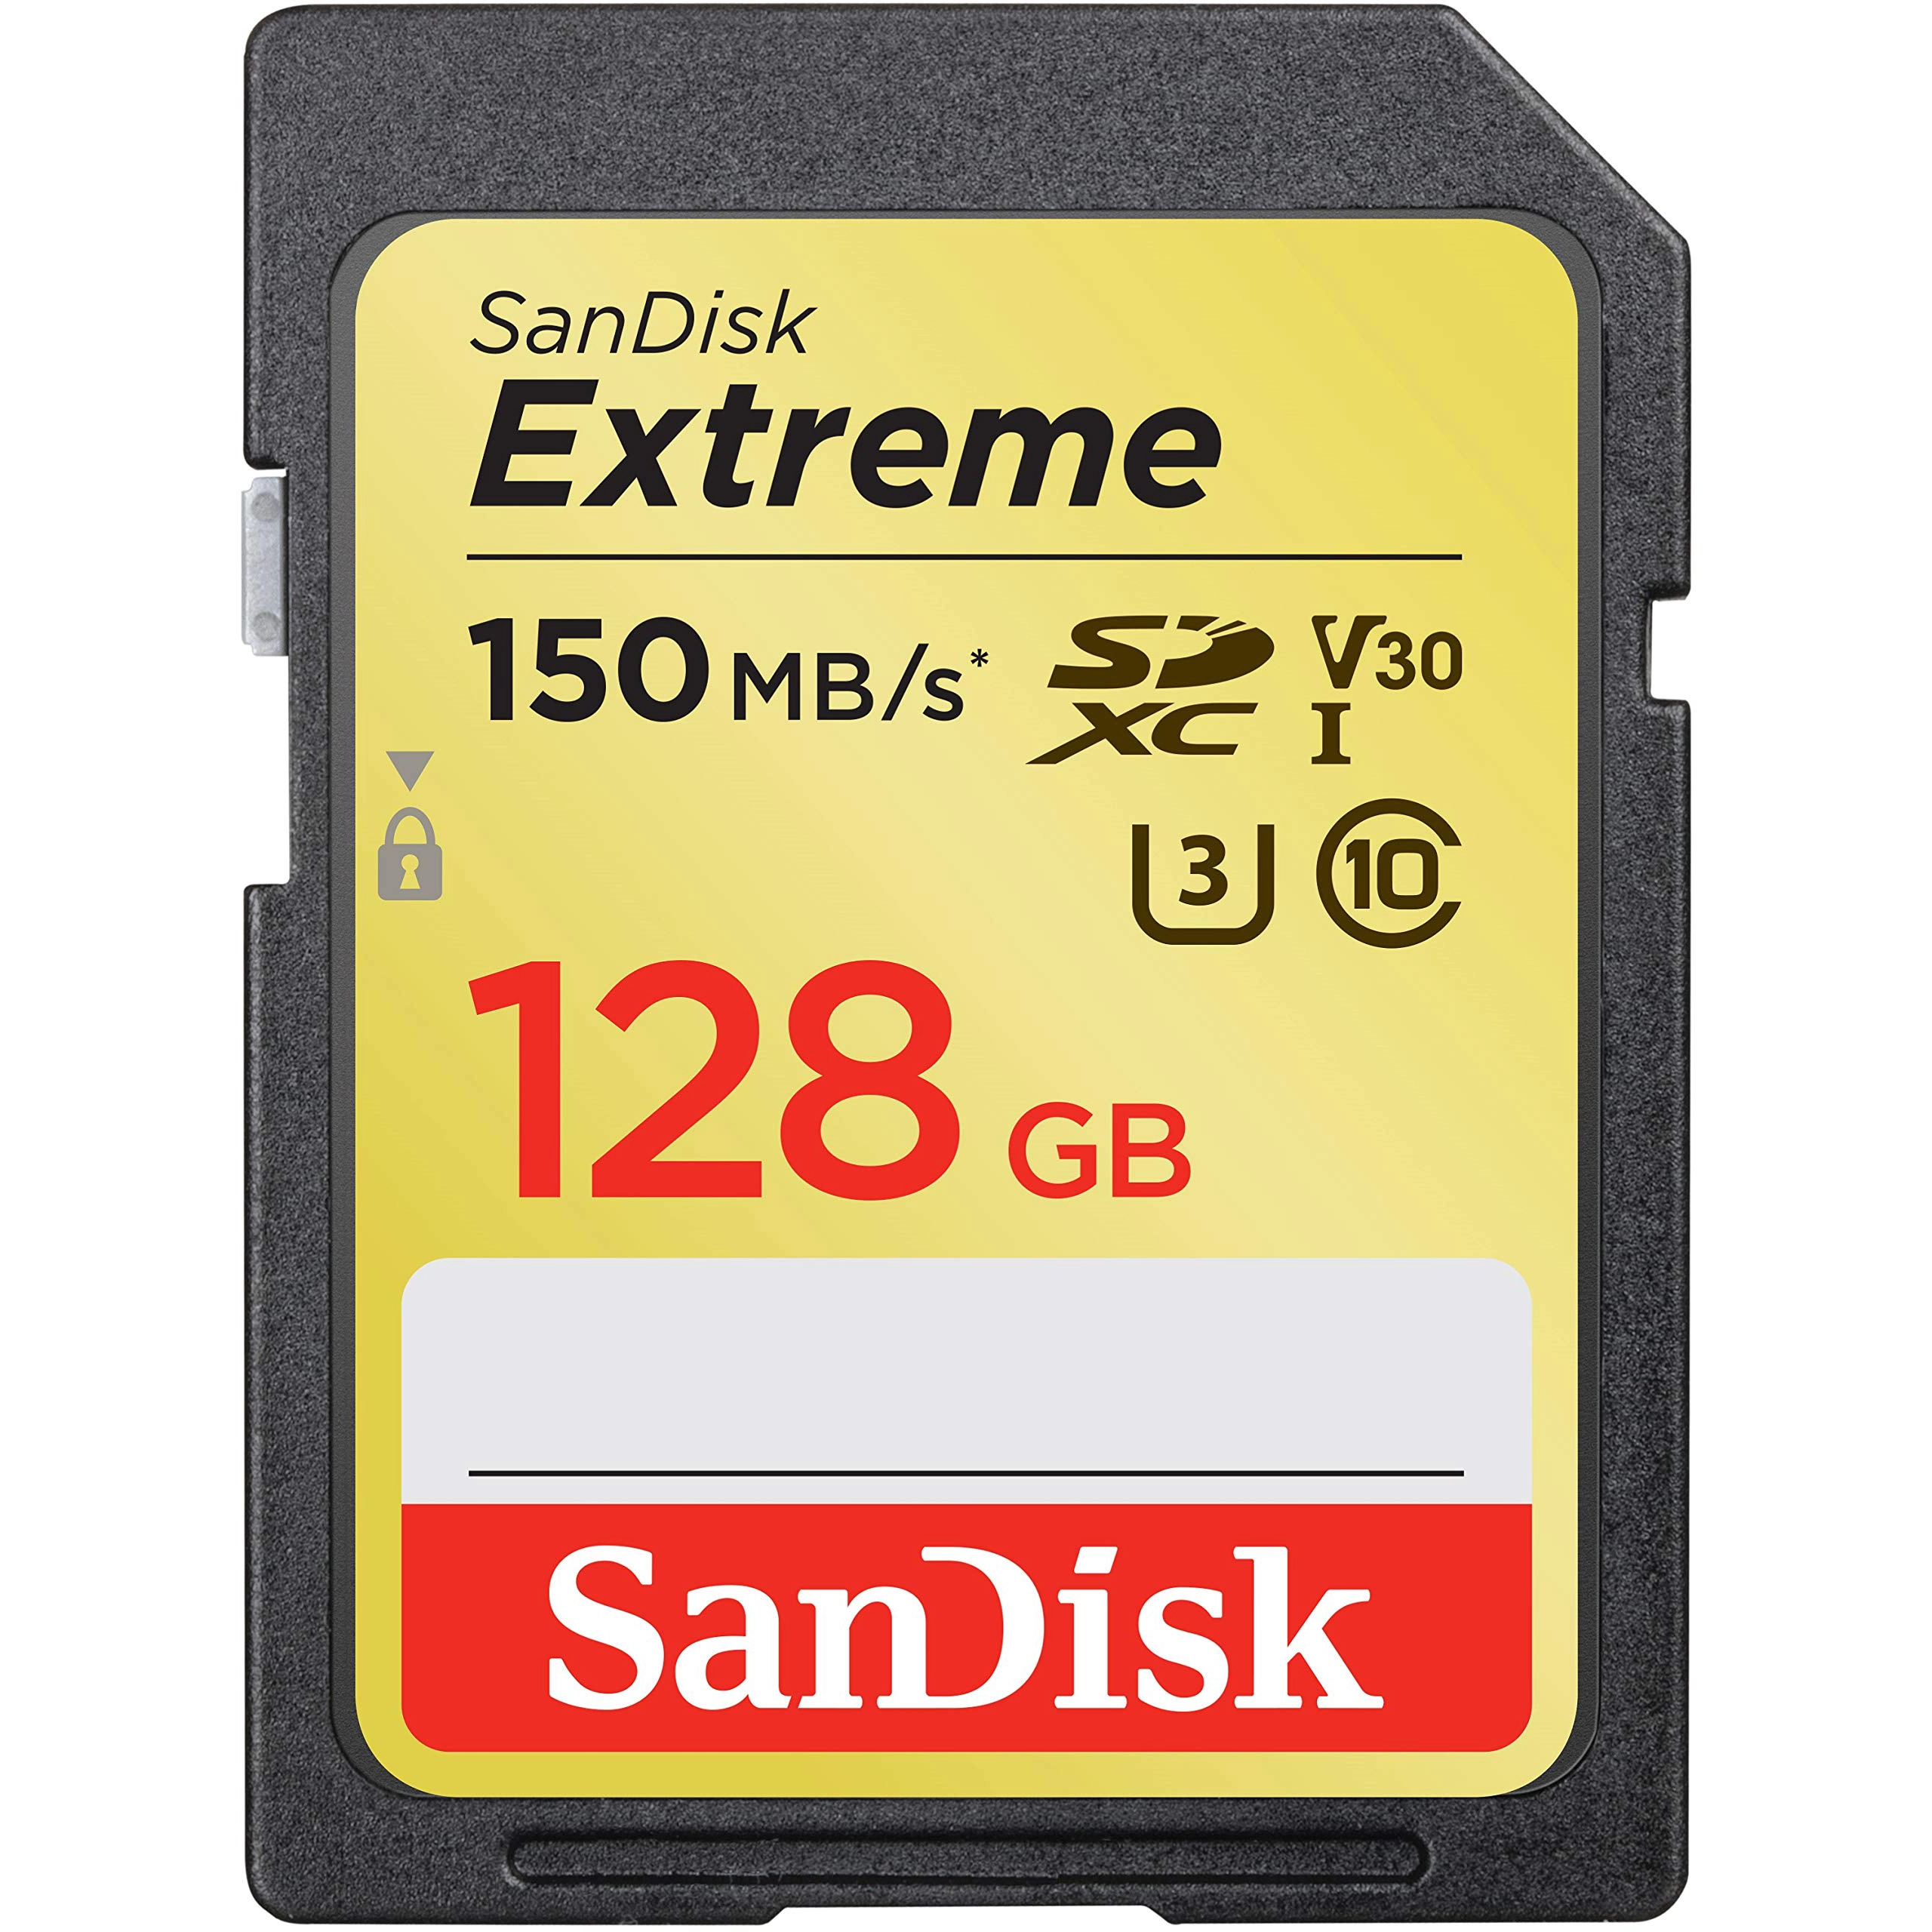 Sandisk Extreme UHS-I Card SD 128GB